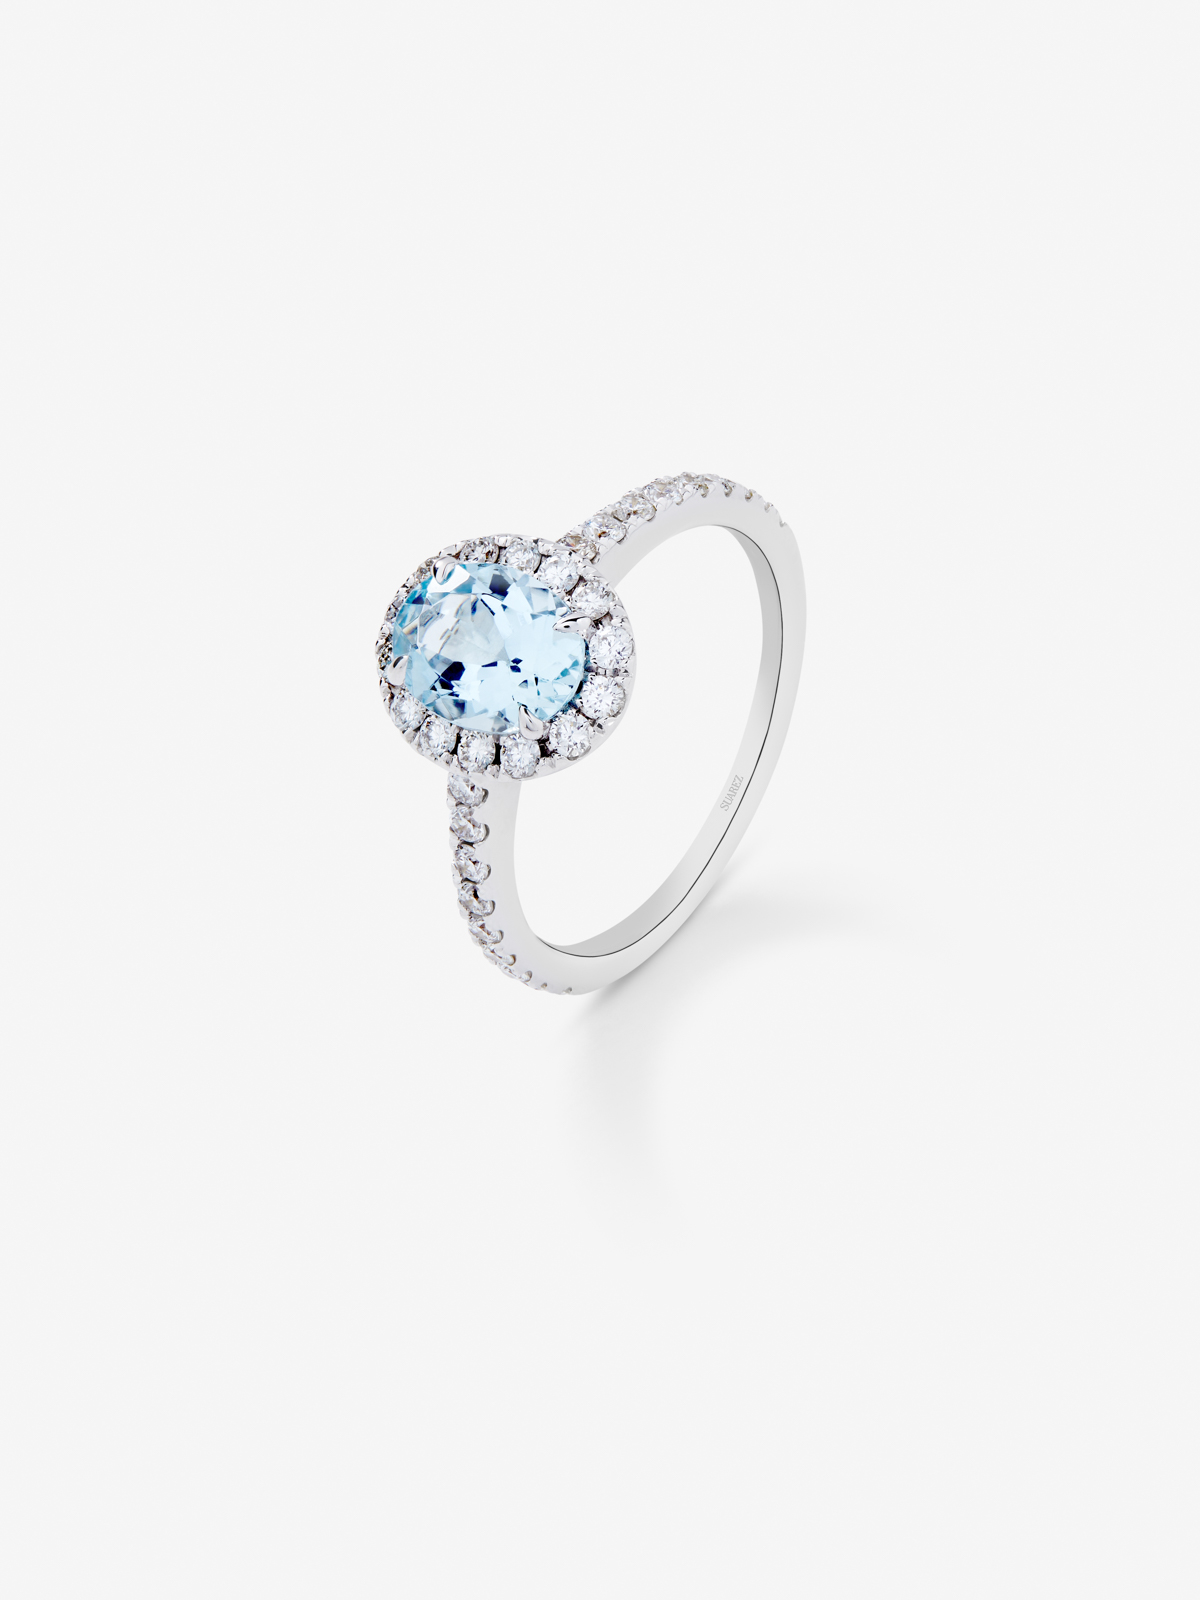 18K white gold ring with aquamarine and diamond